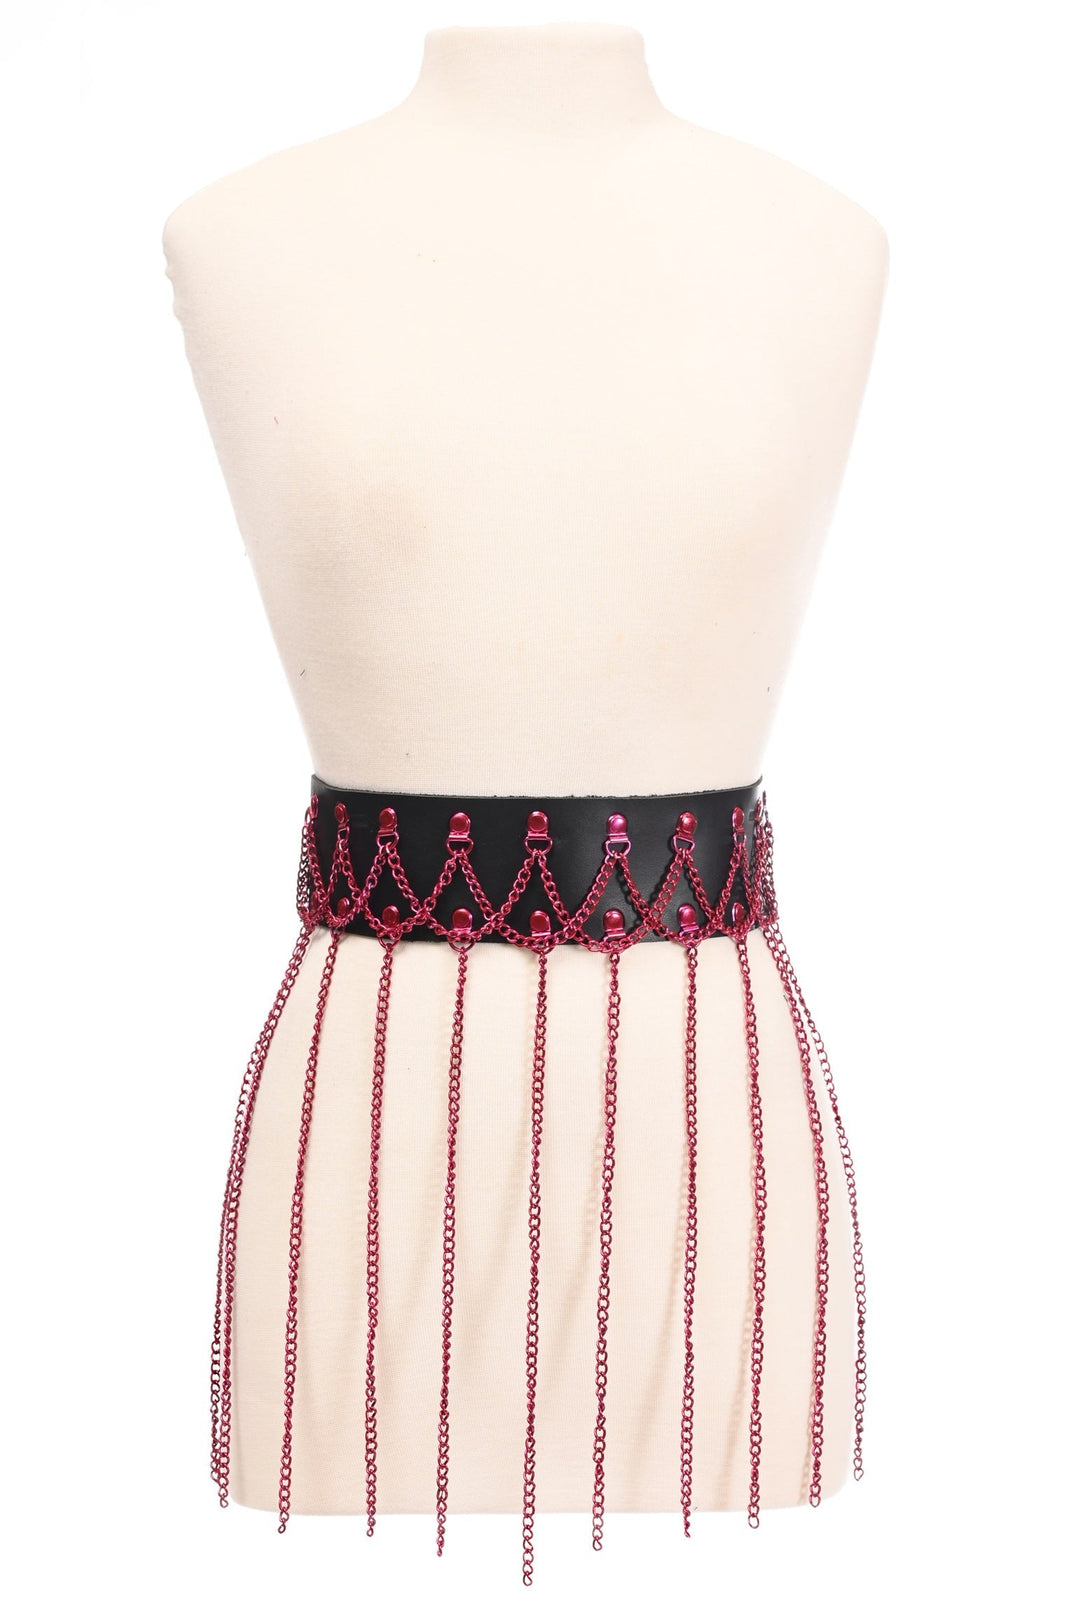 Black Faux Leather & Pink Metallic Chain Fringe Skirt